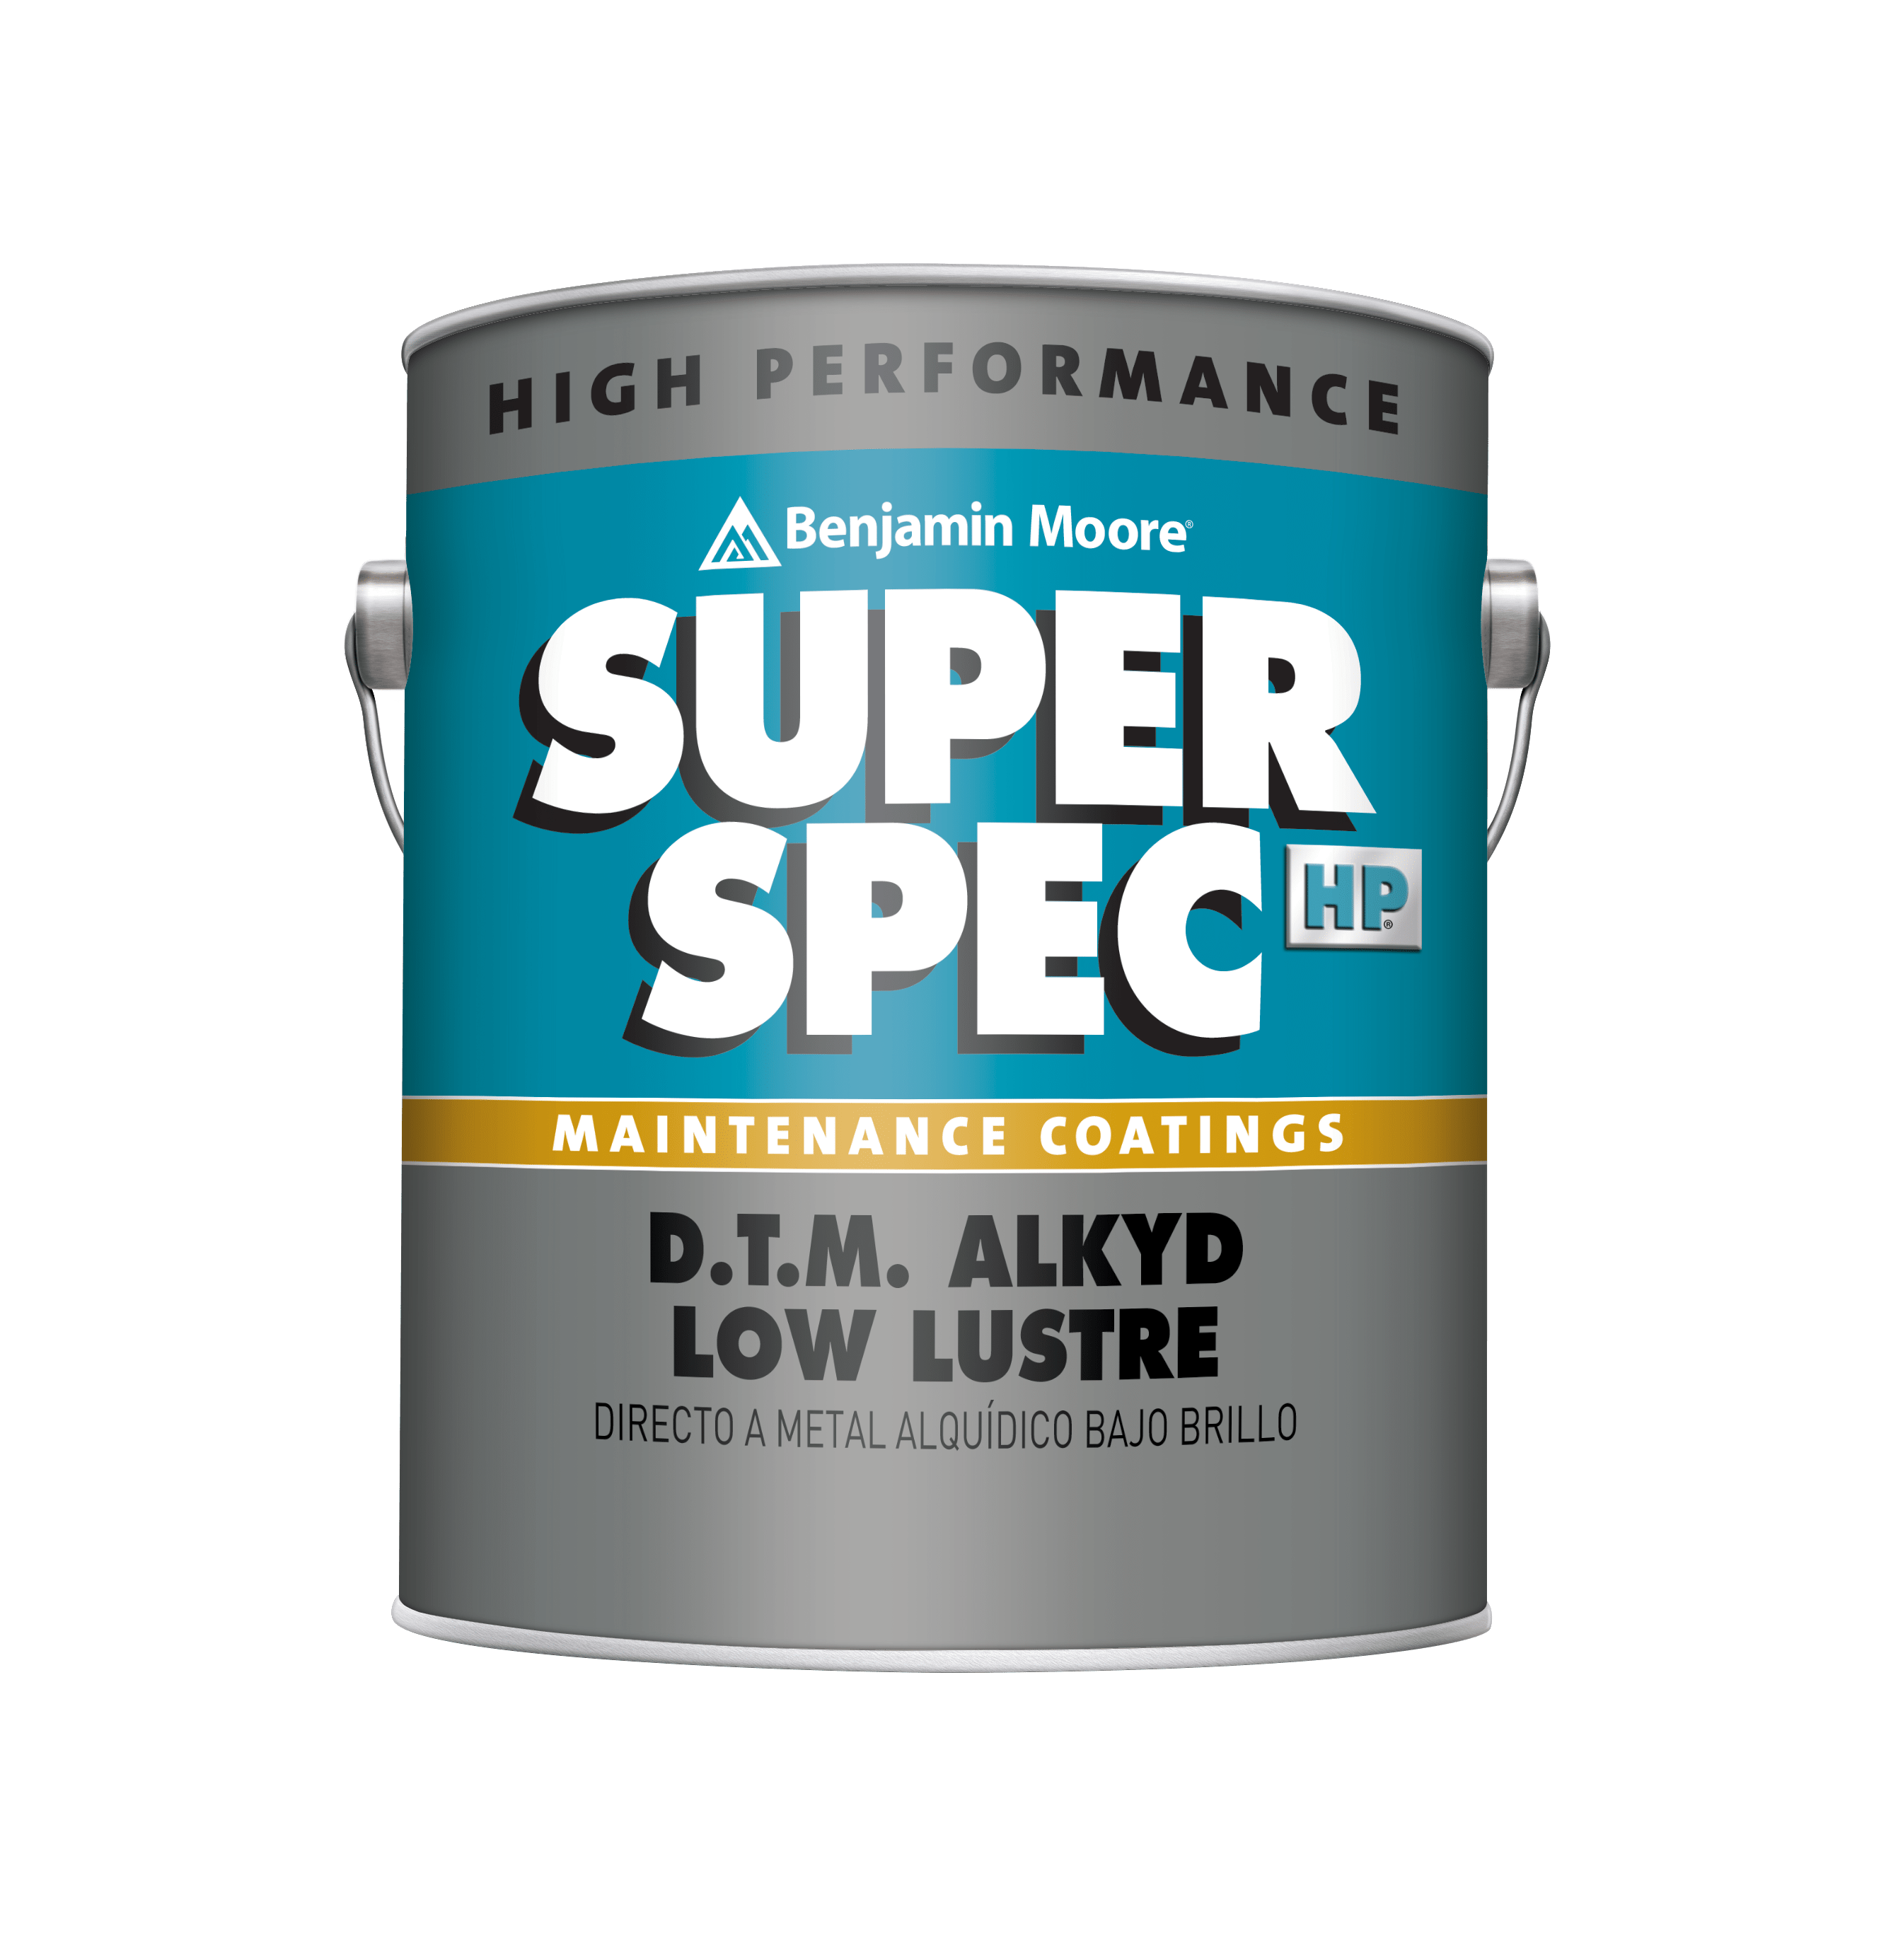 Super Spec HP DTM Alkyd 窶� Rossi Paint Stores